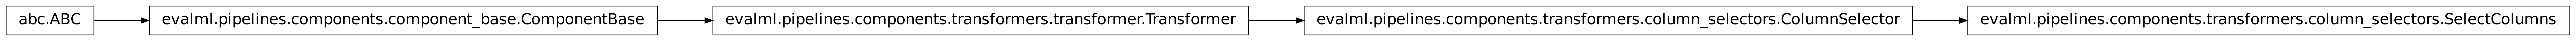 Inheritance diagram of SelectColumns